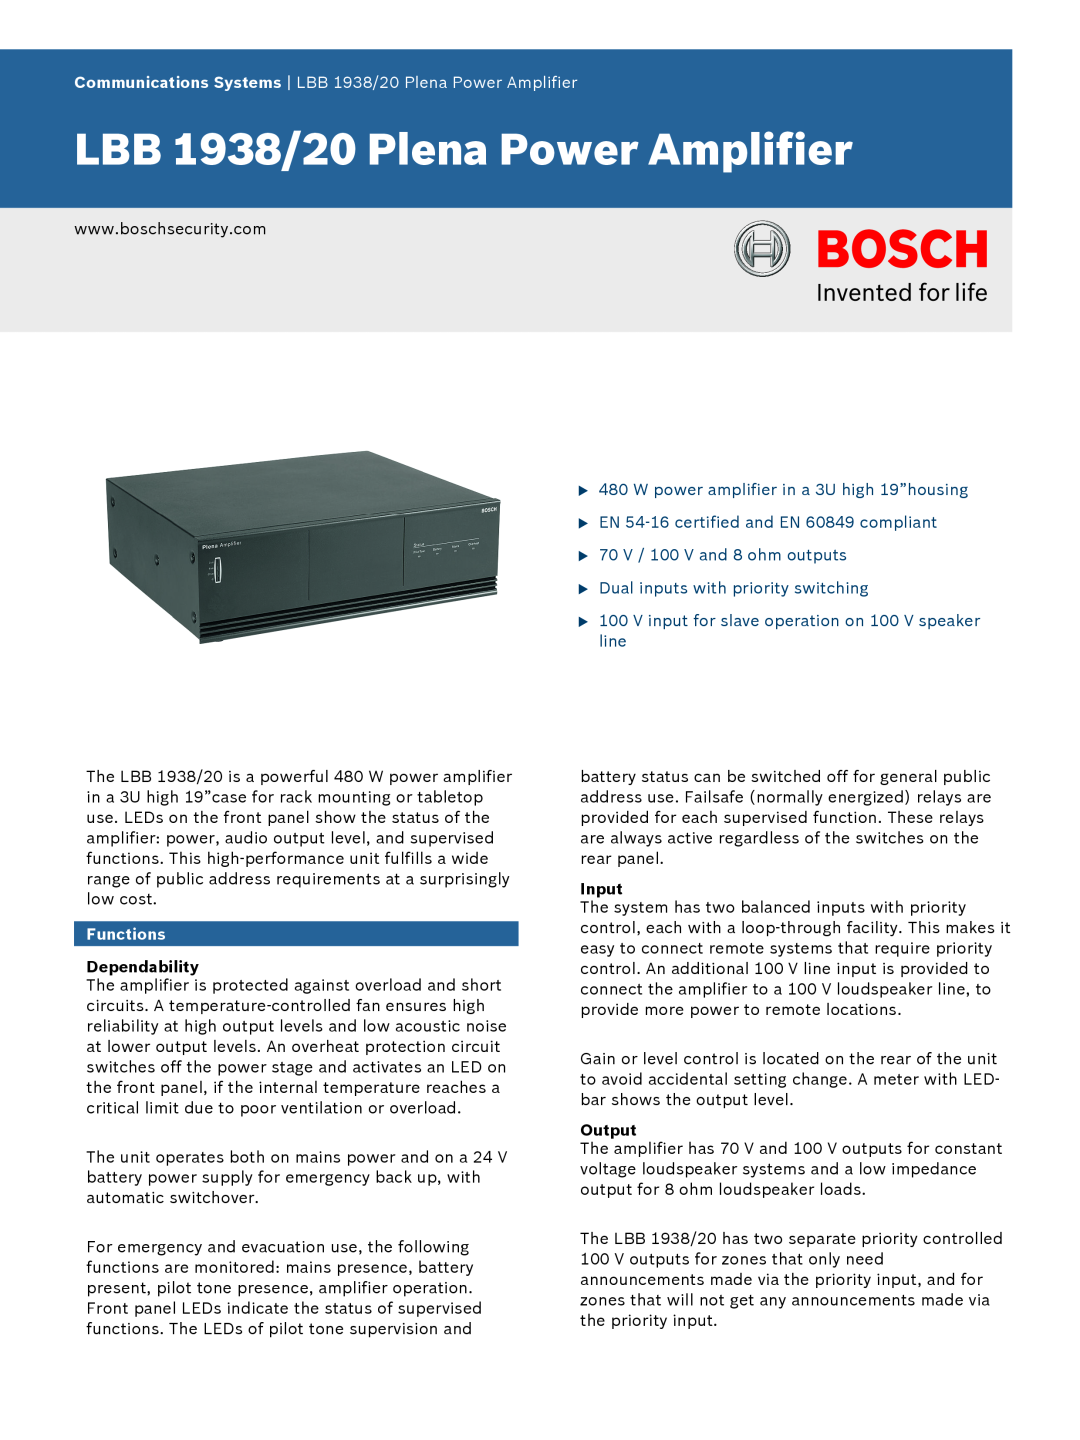 Bosch Appliances manual Functions, Dependability, Input, Output, LBB 1938/20 Plena Power Amplifier 